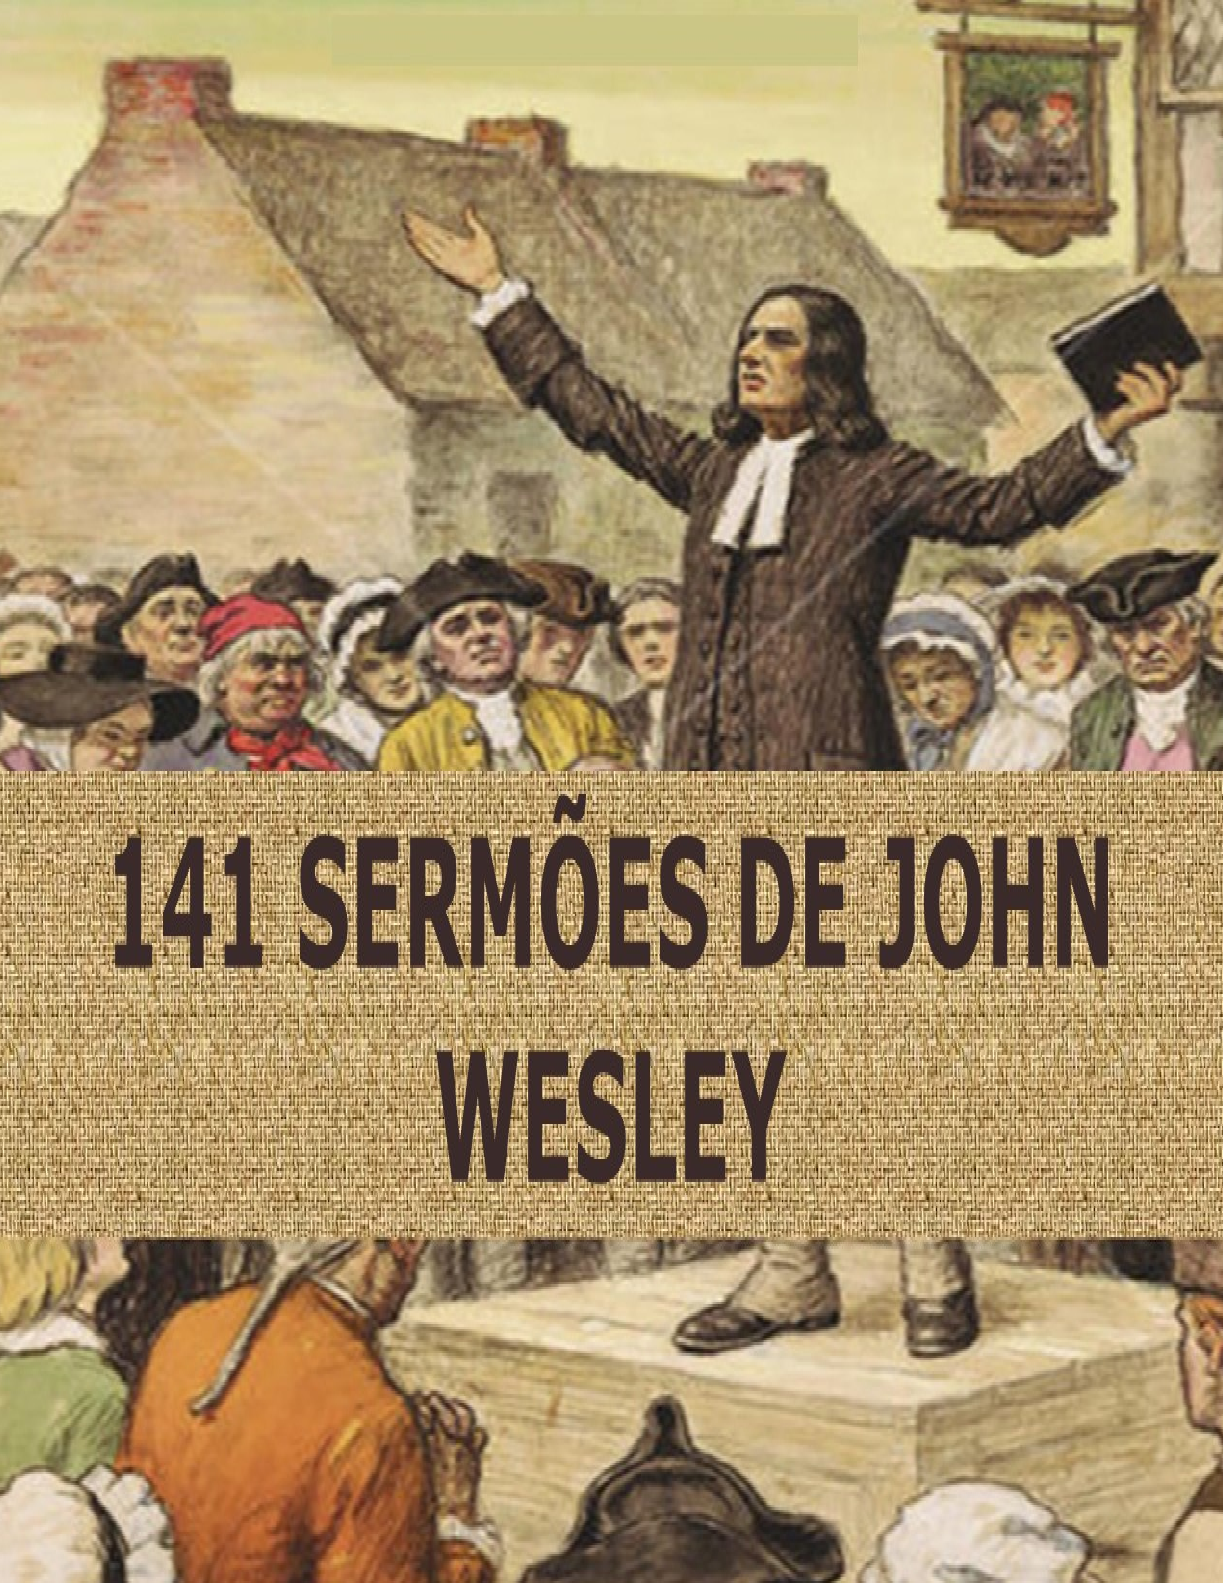 John Wesley Brasil  John wesley, Graça de deus, Mensagens